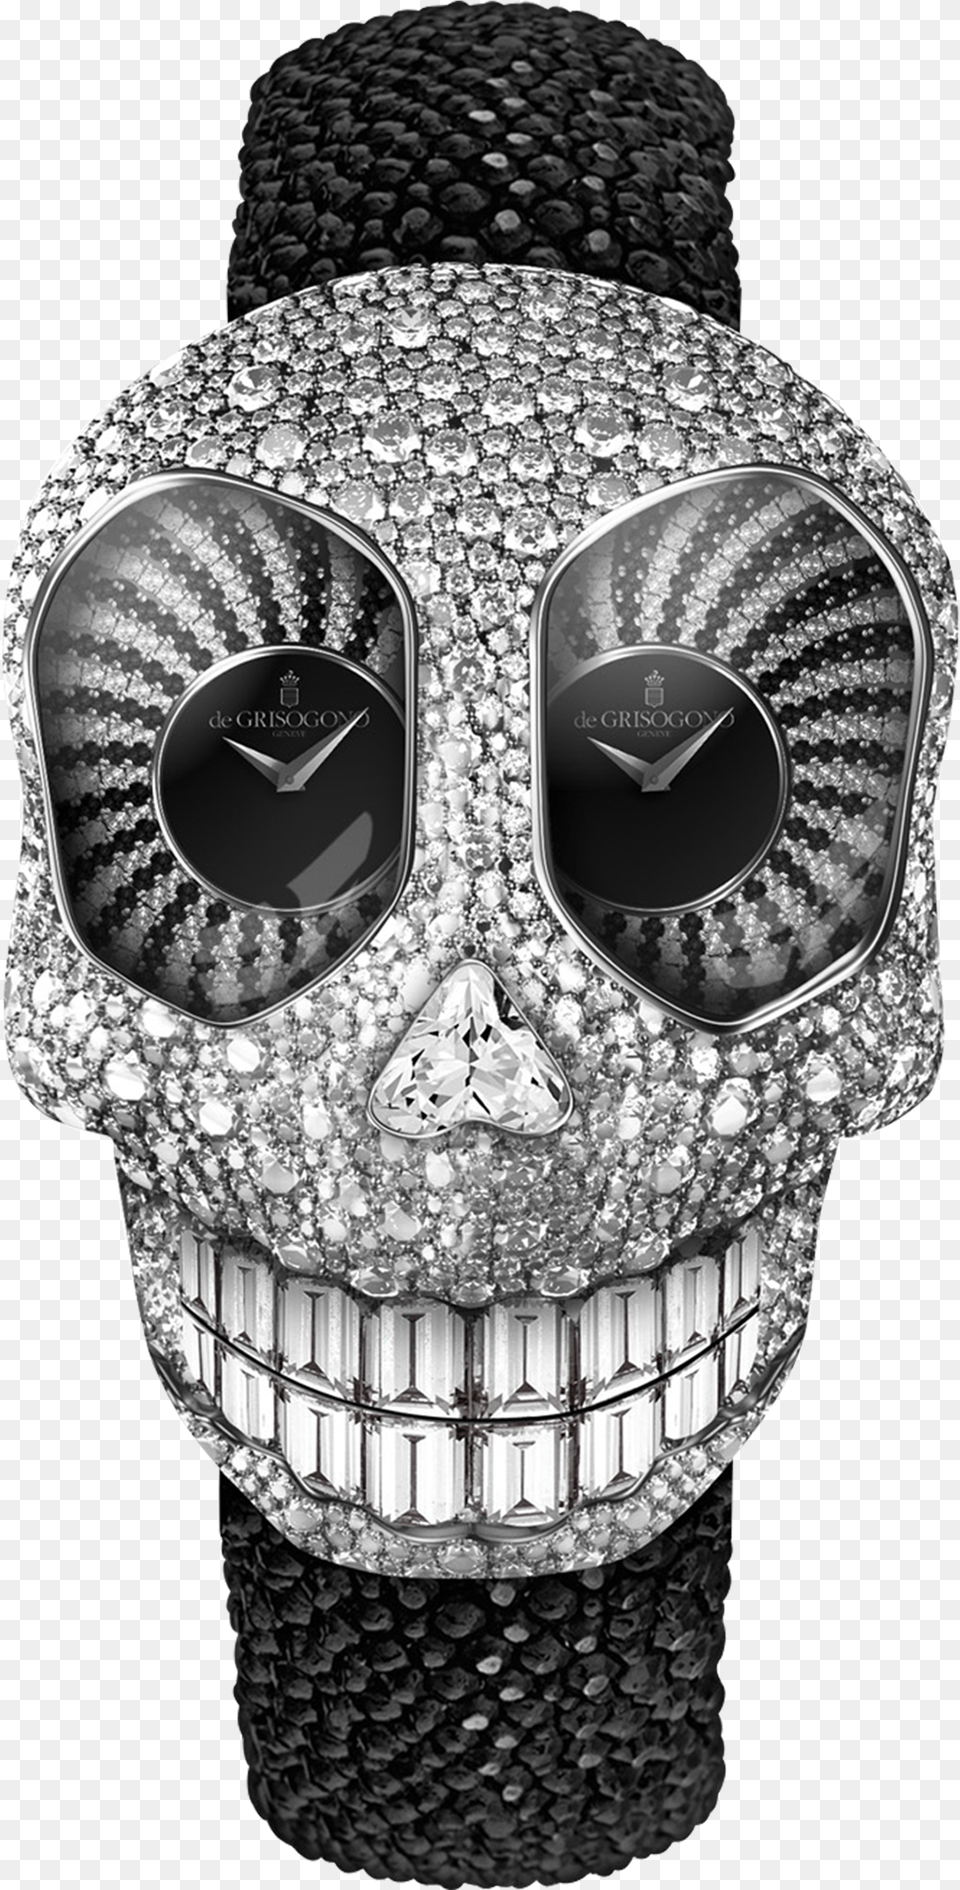 De Grisogono Black Diamond Crazy Skull Watch, Arm, Body Part, Person, Wristwatch Png